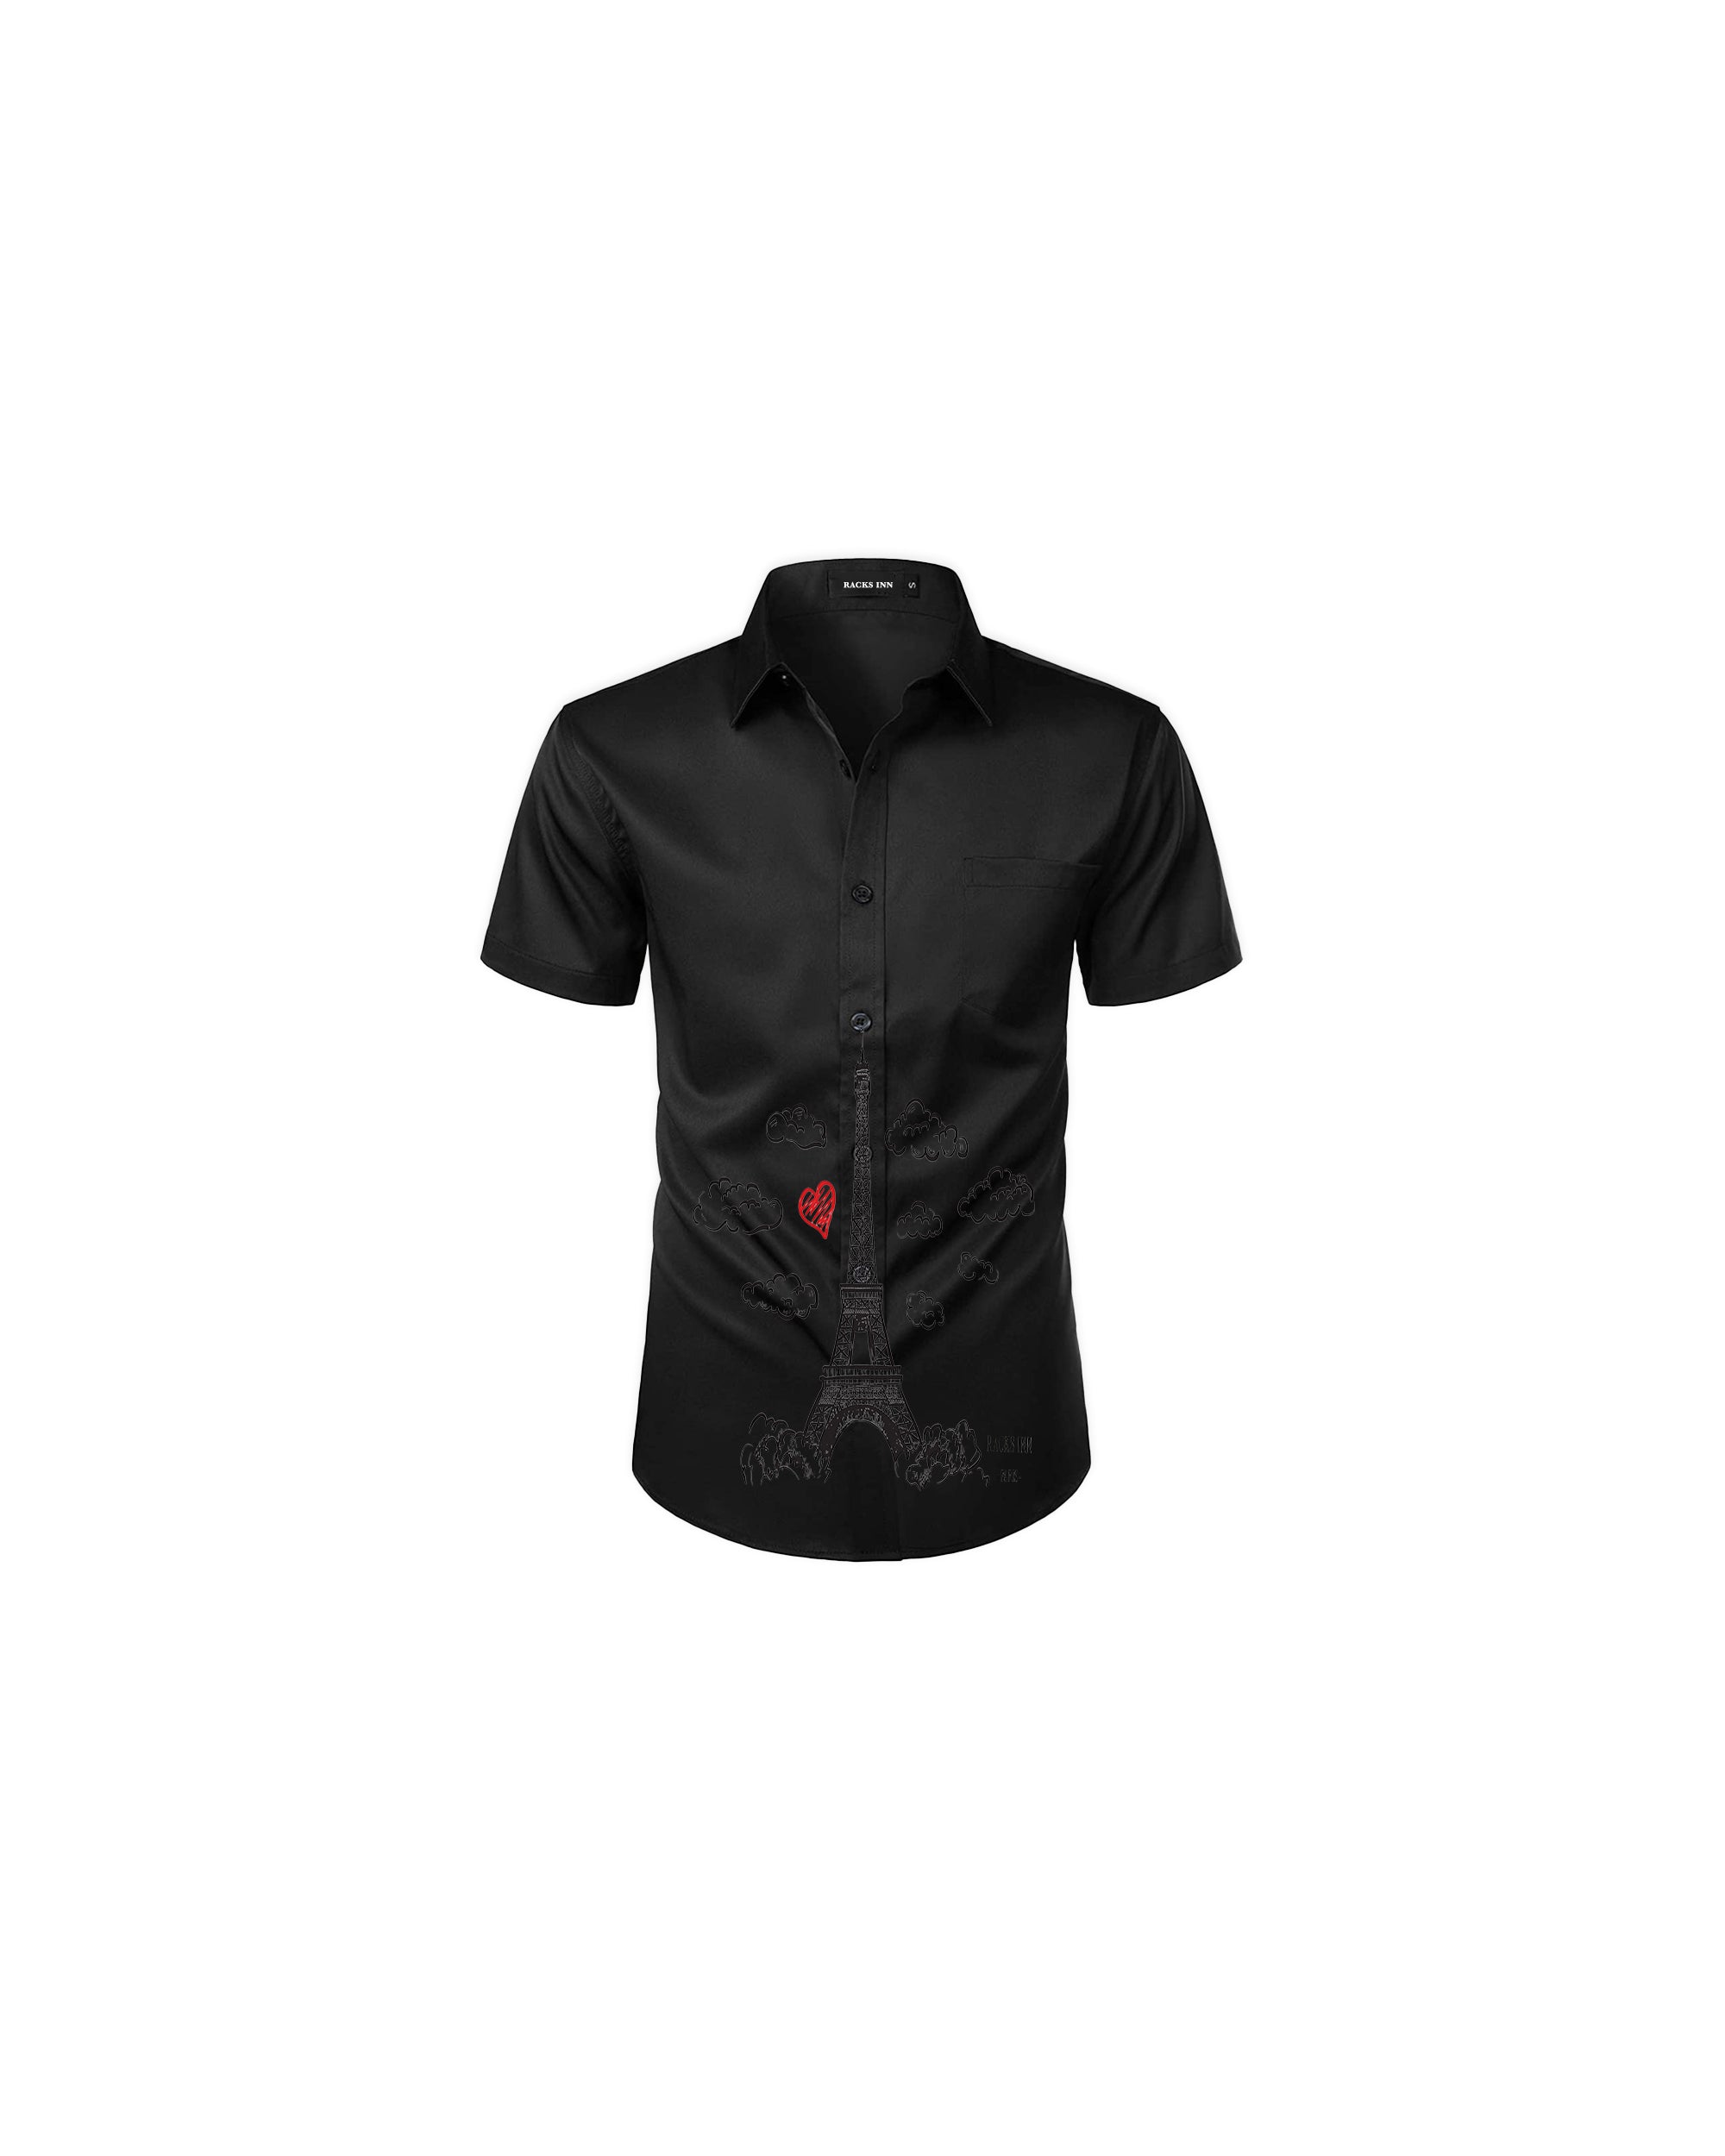 Racks Tower Casual Shirt - All black